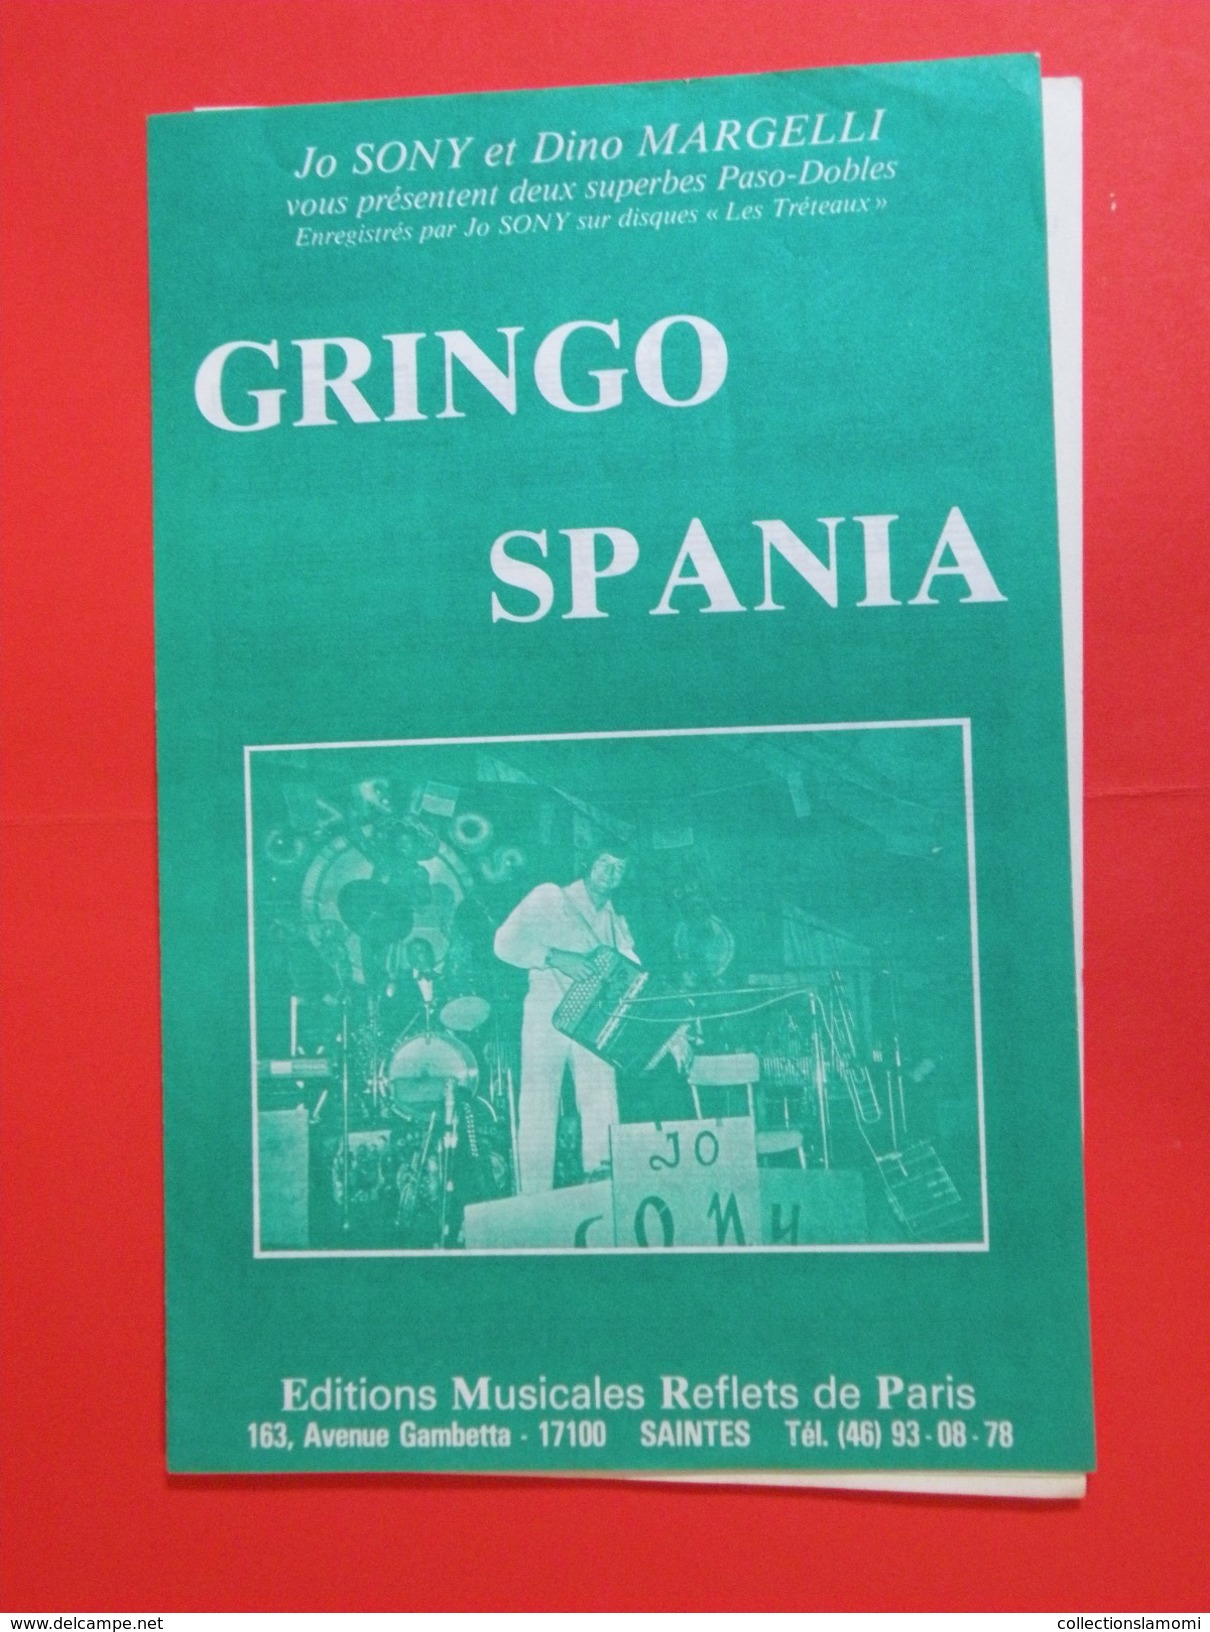 Gringo  Spania (Musique Dino Margelli)Partition - Scholingsboek